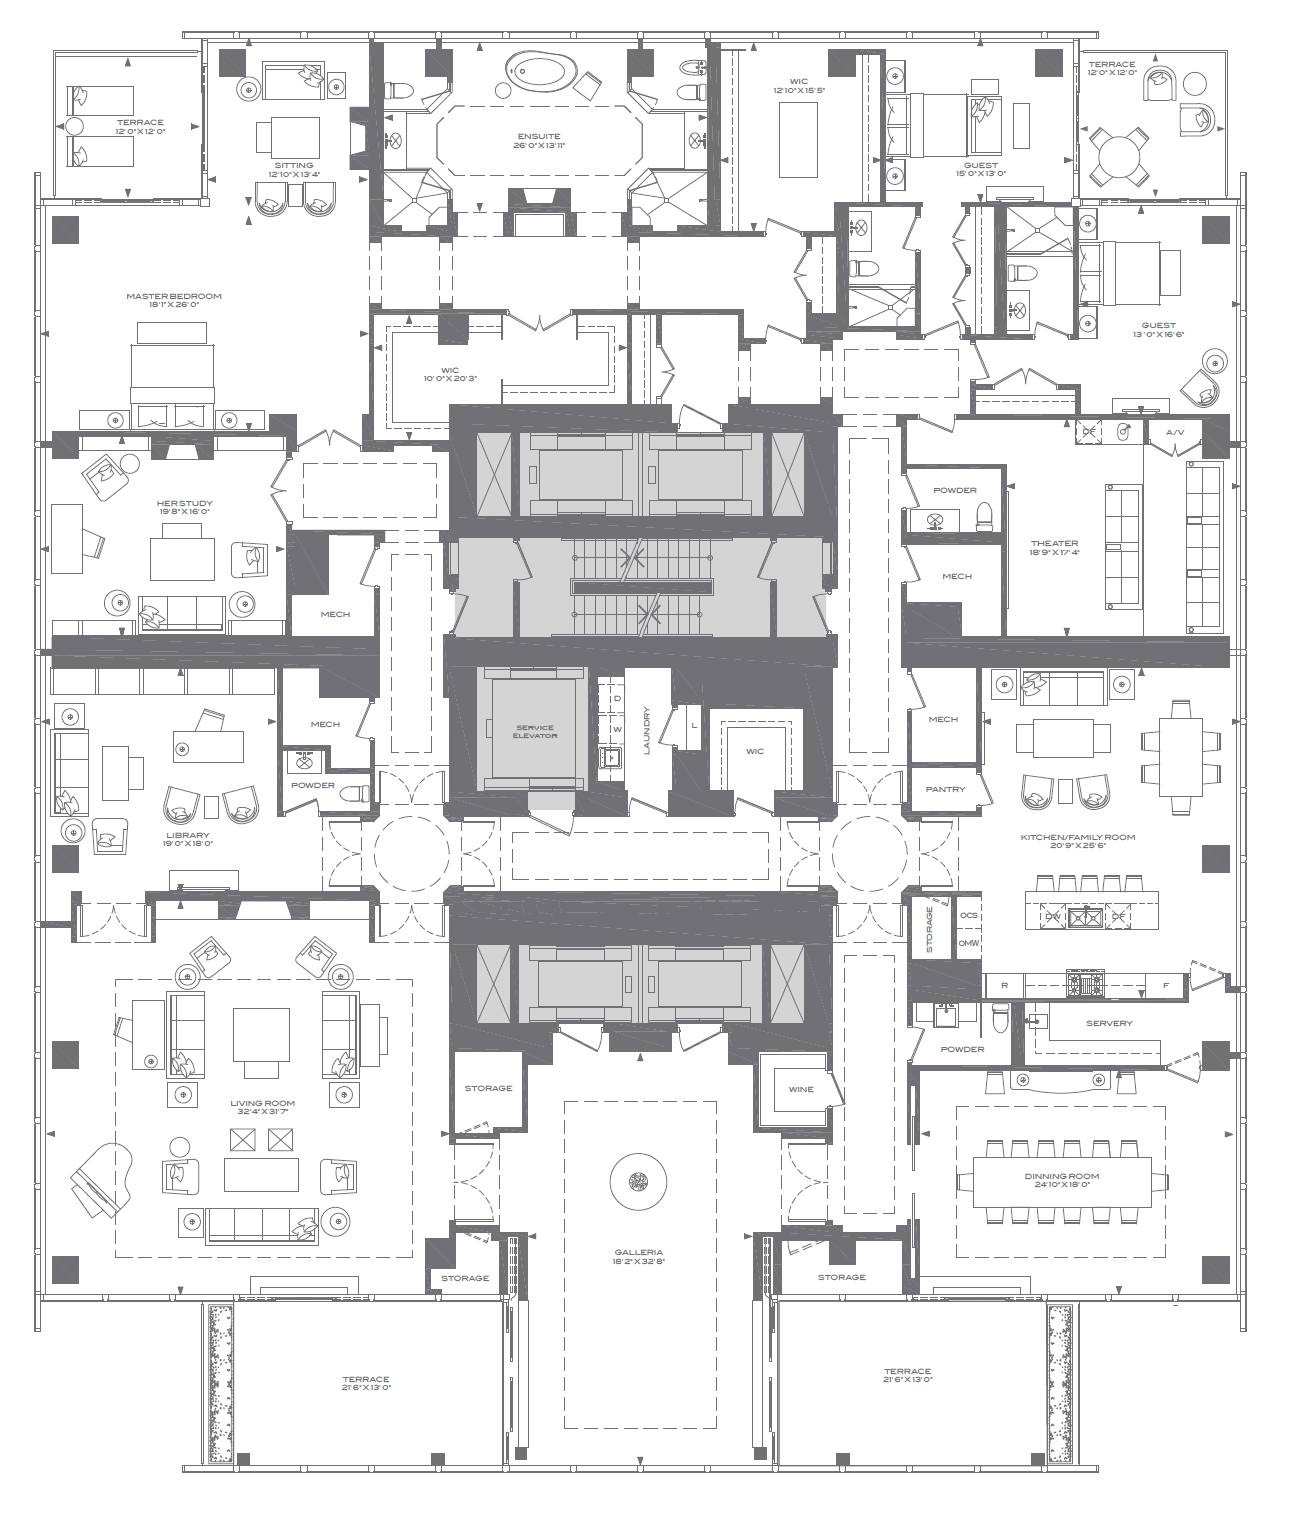 talkcondo-four-seasons-penthouse-floorplan.png